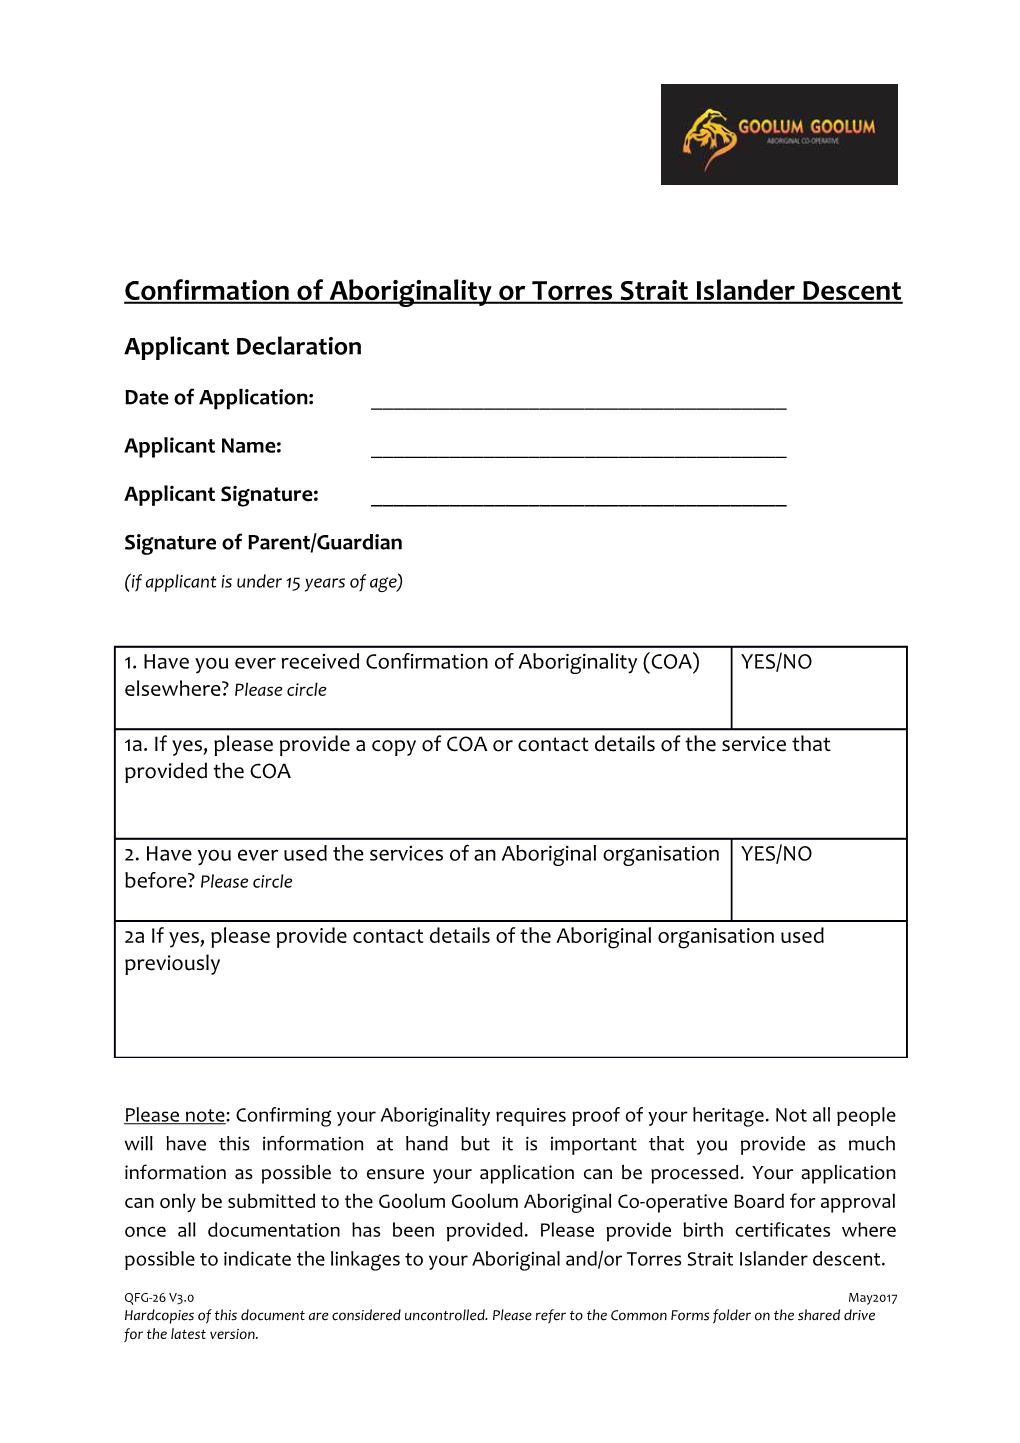 Confirmation of Aboriginality Or Torres Strait Islander Descent